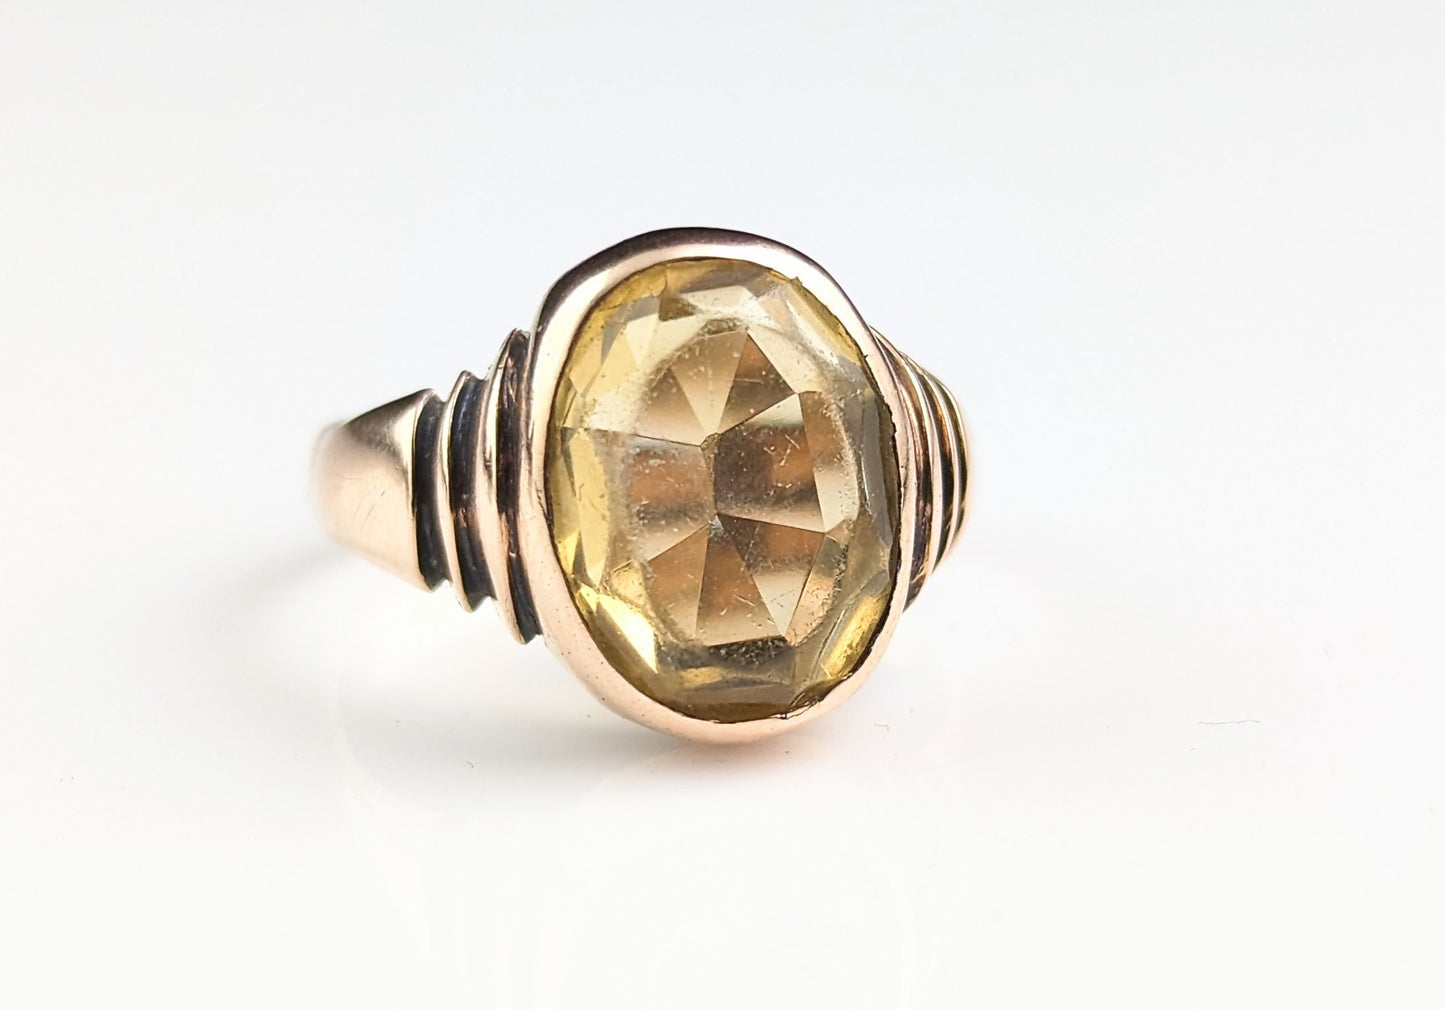 Antique citrine solitaire ring, 9ct gold, Victorian